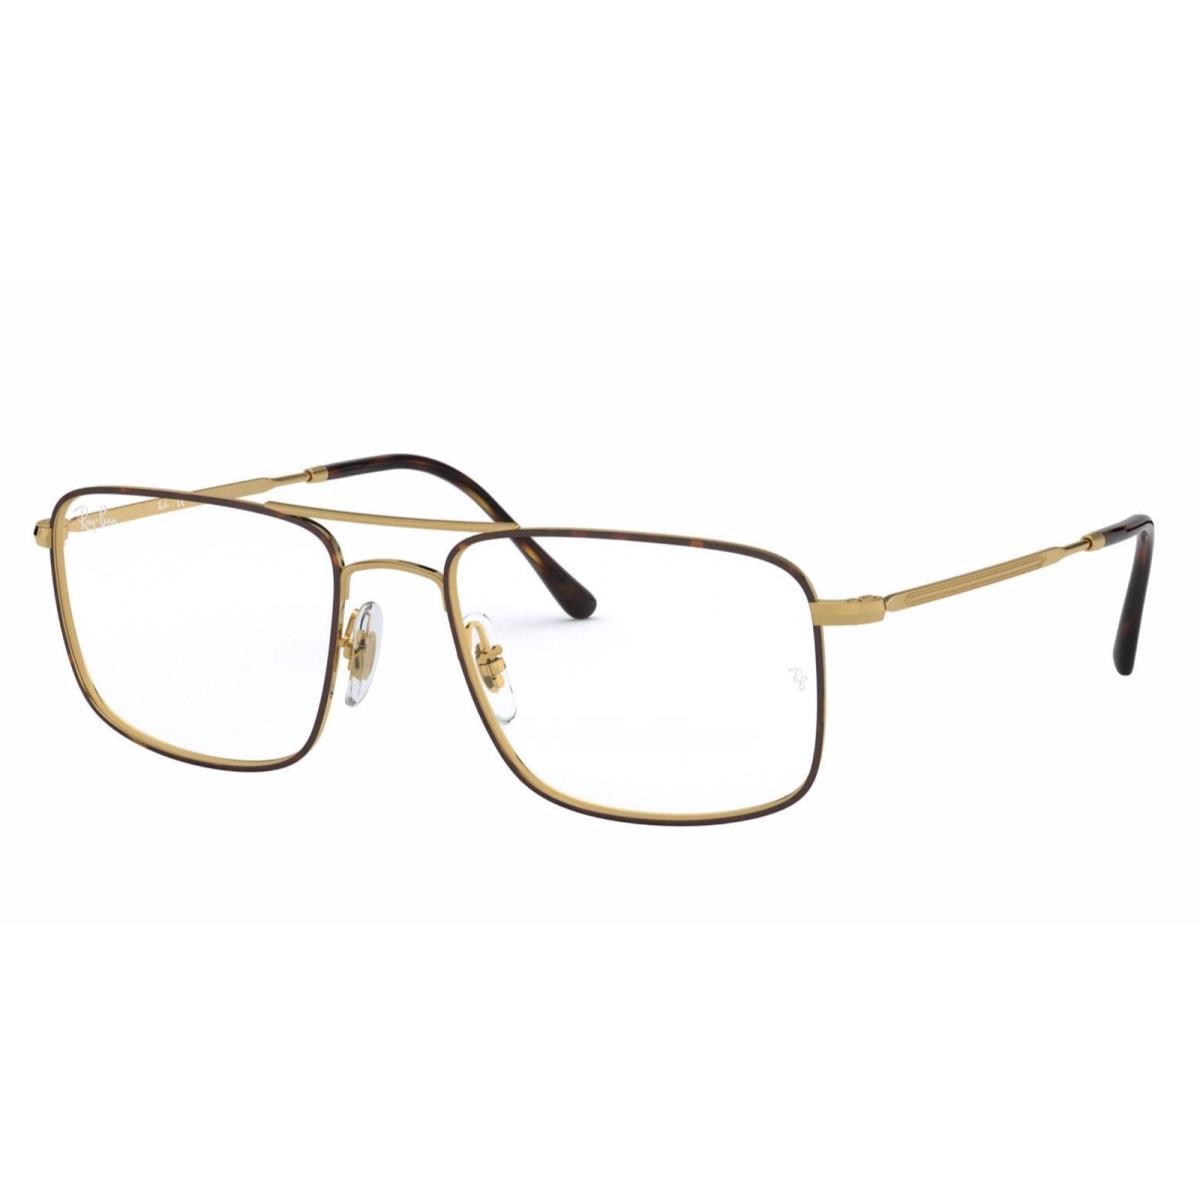 Ray-ban Rx-able Eyeglasses RB 6434 2945 53-18 140 Gold Tortoise Frames - Frame: Gold & Tortoise, Lens: Demos with Logo Imprint